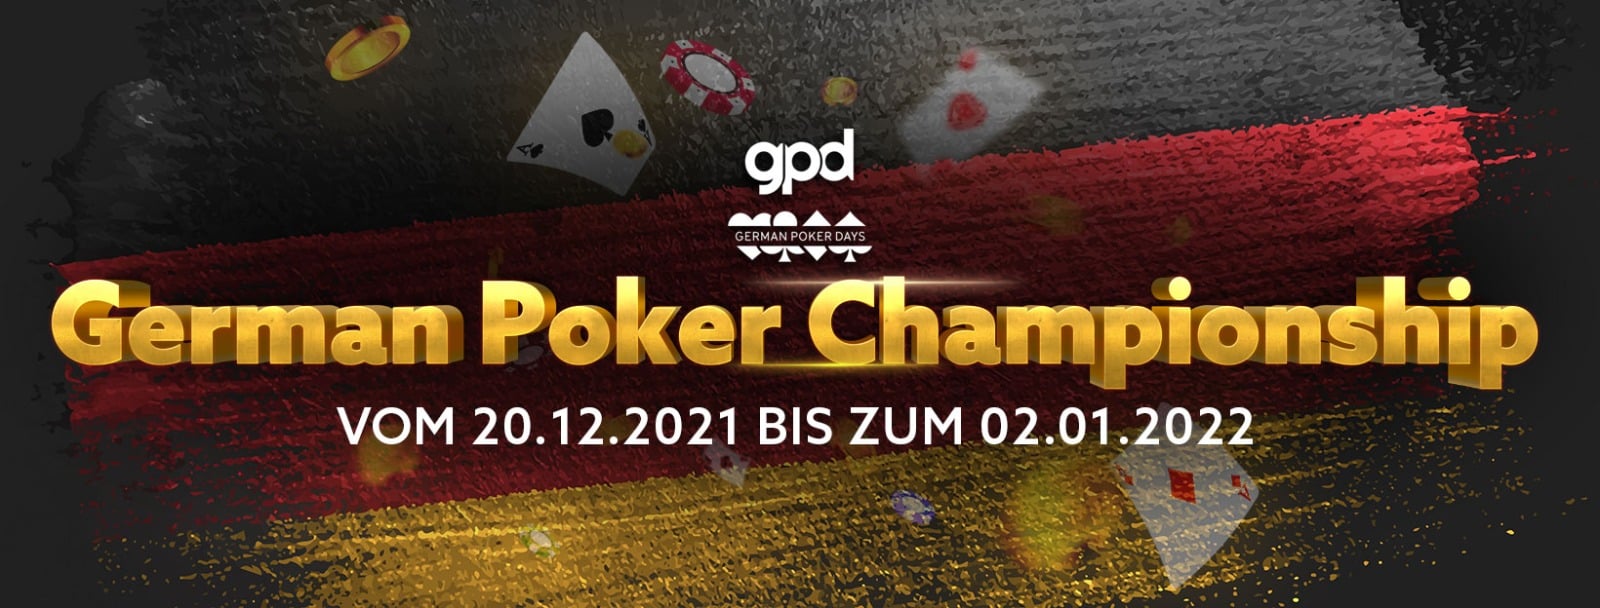 German Poker Days – Starttag 3